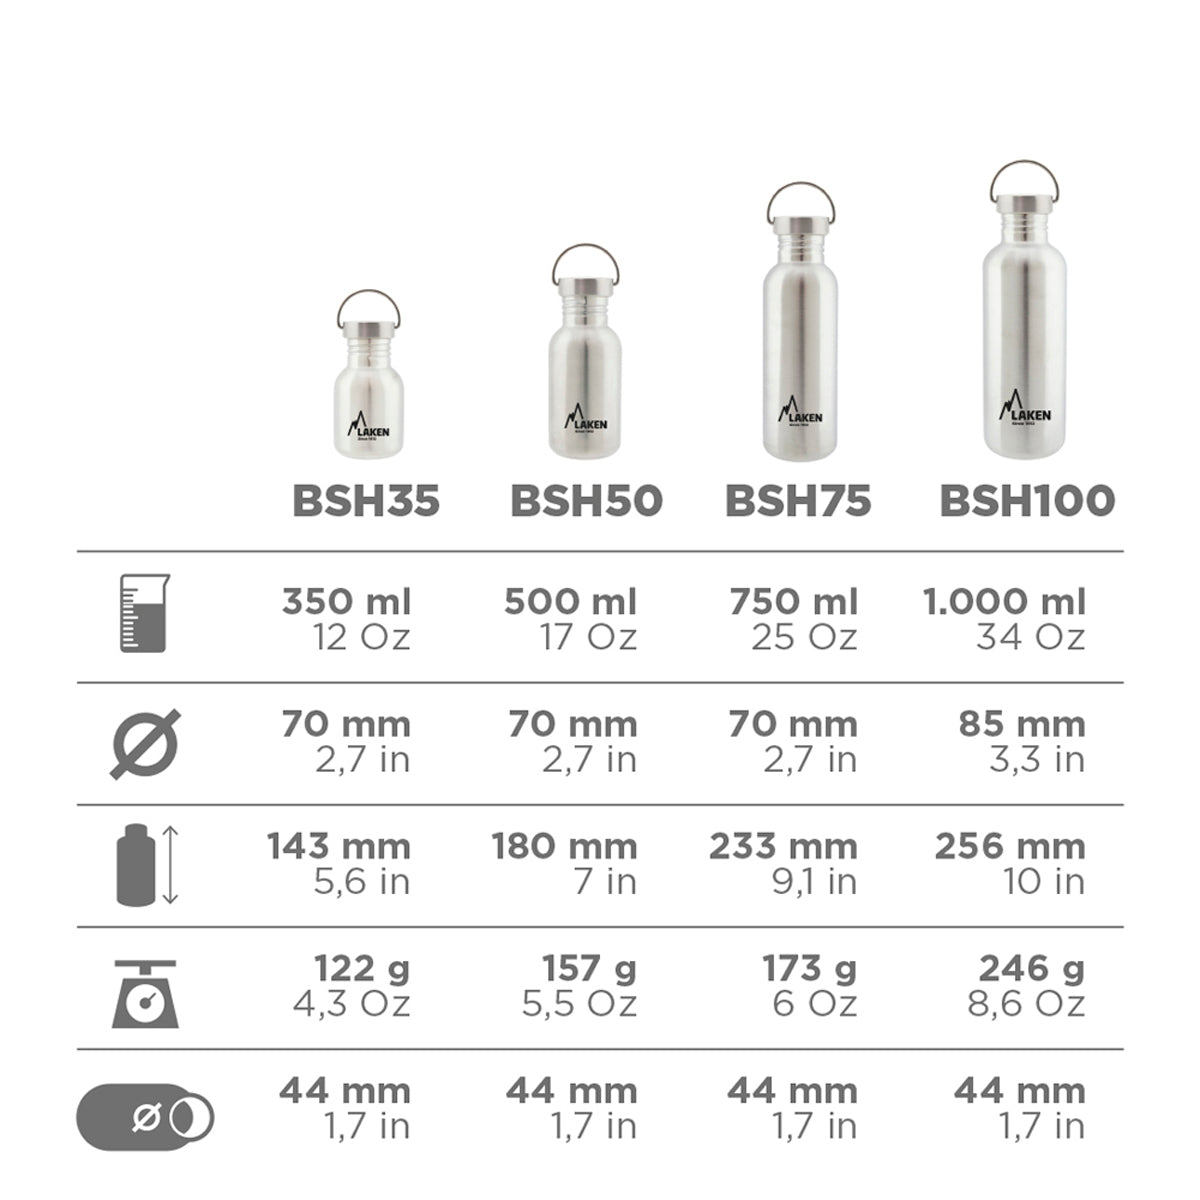 Laken RVS drinkfles Basic Steel serie - RVS dop - Diverse kleuren Laken